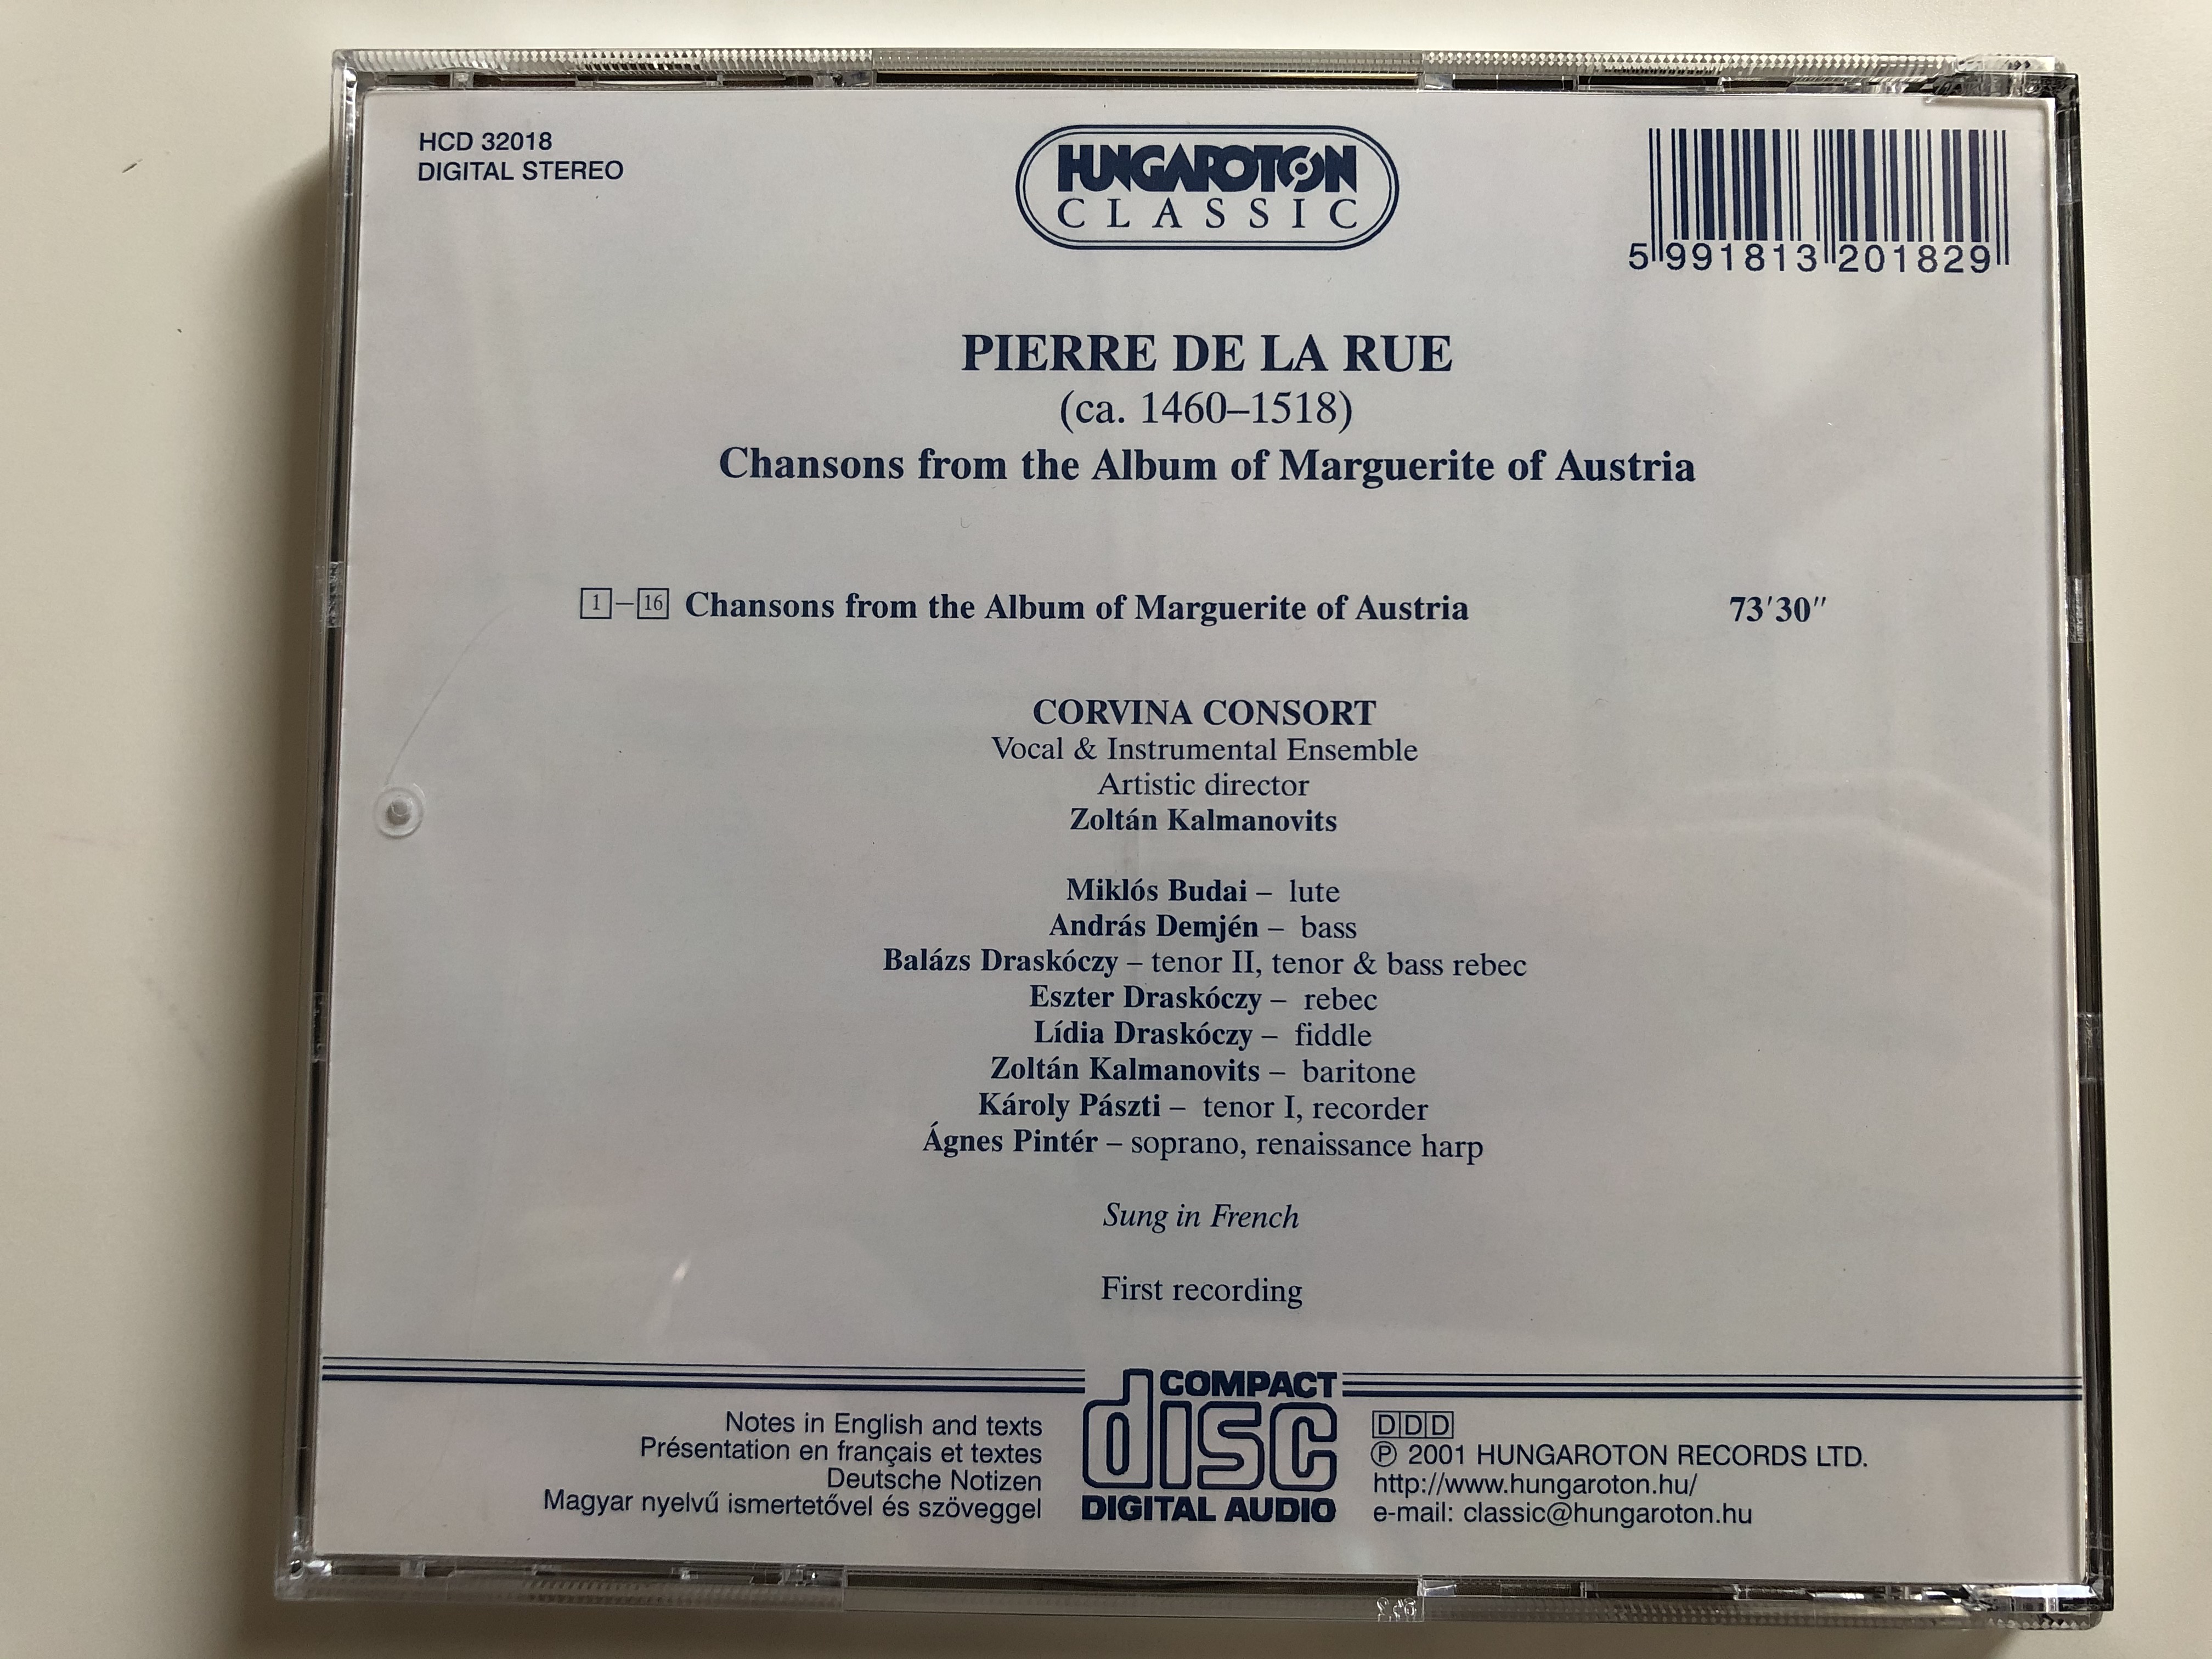 pierre-de-la-rue-chansons-from-album-of-marguerite-of-austria-corvina-consort-vocal-instrumental-ensemble-artistic-director-zoltan-kalmanovits-hungaroton-classic-audio-cd-2001-stereo-hcd-13-.jpg